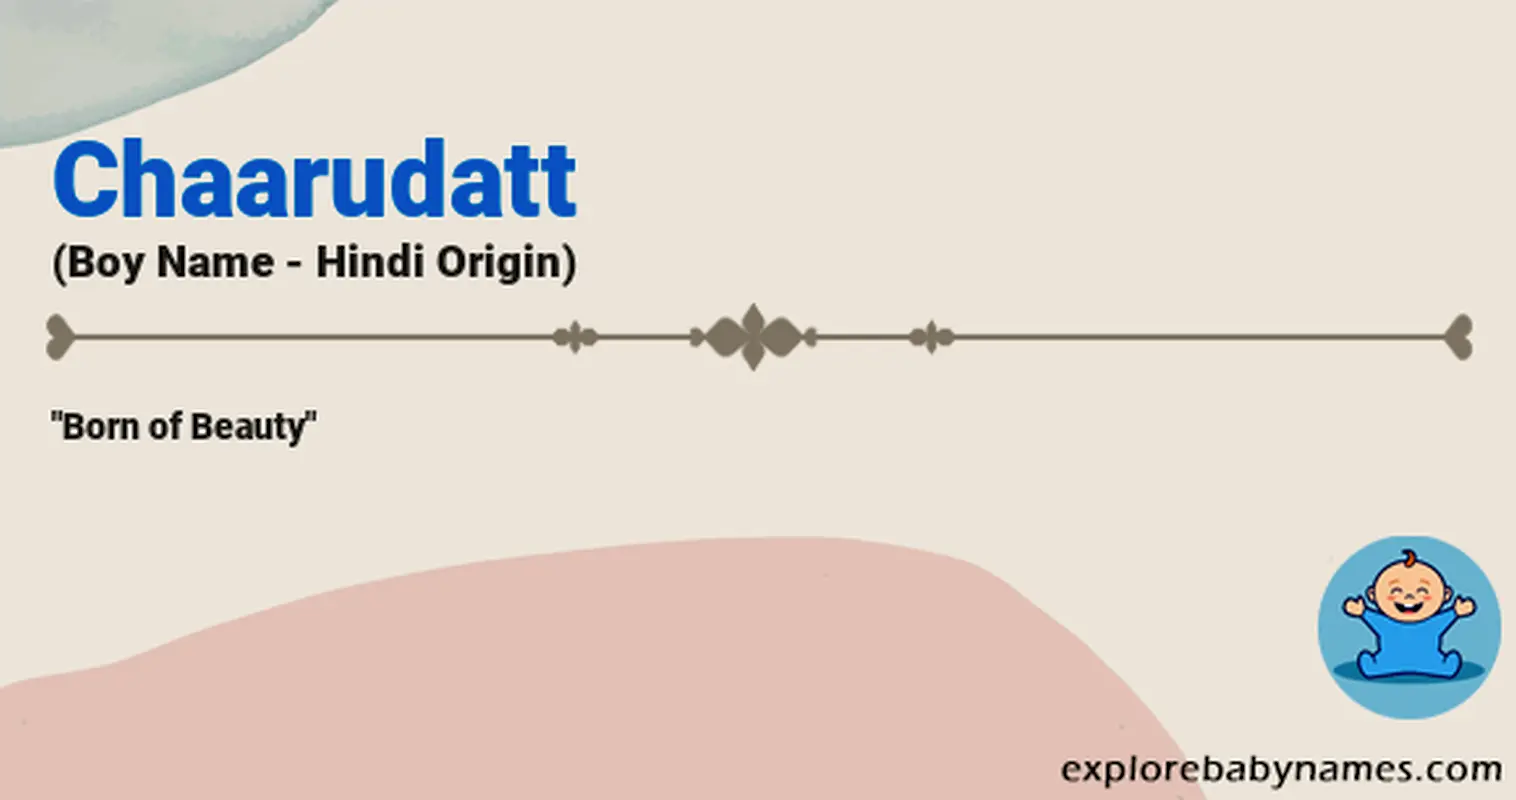 Meaning of Chaarudatt